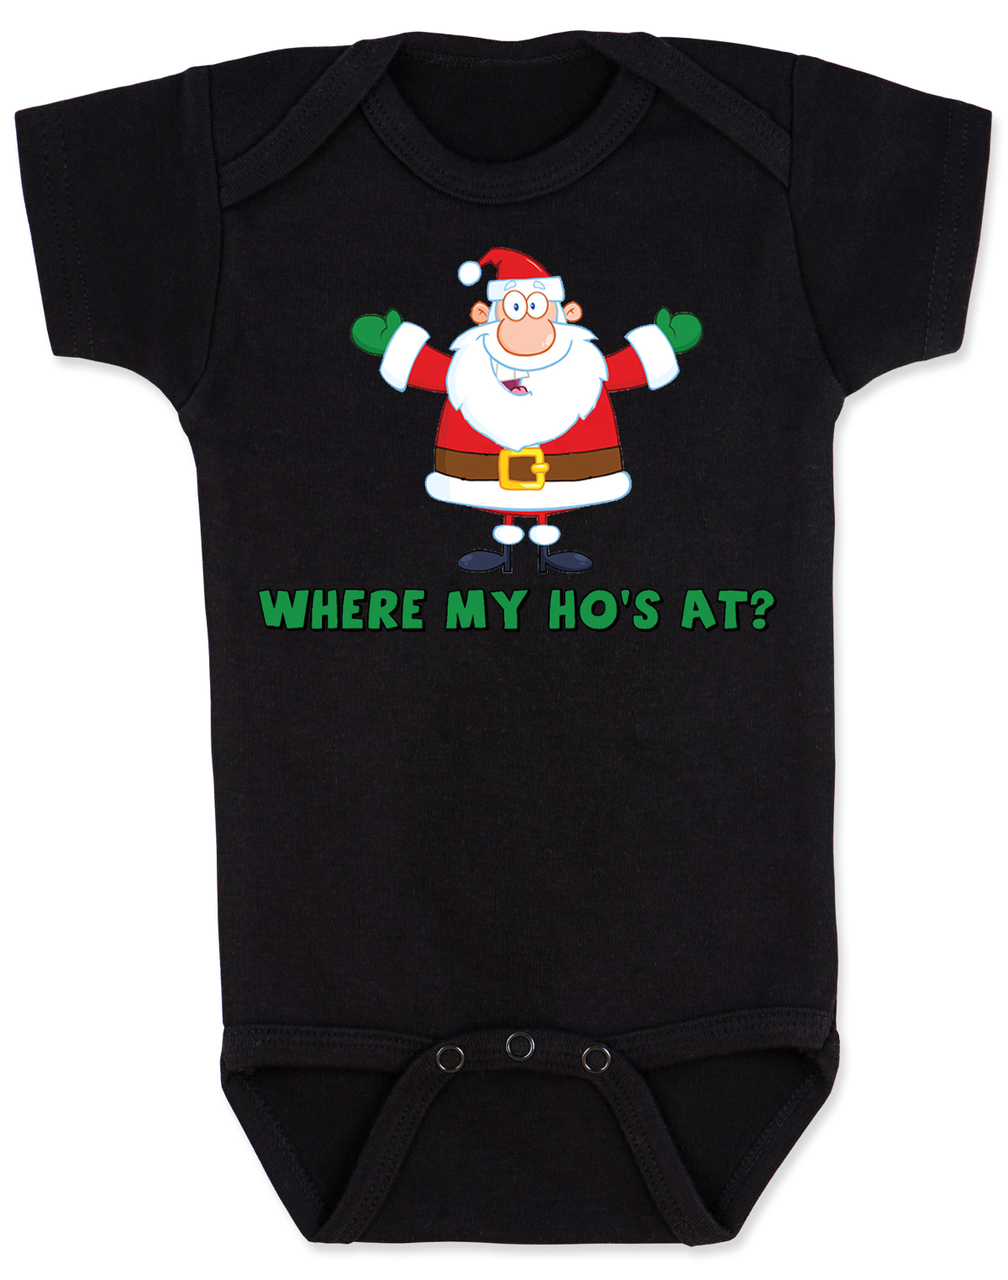 Where my Ho's Santa - baby onesie and toddler shirt